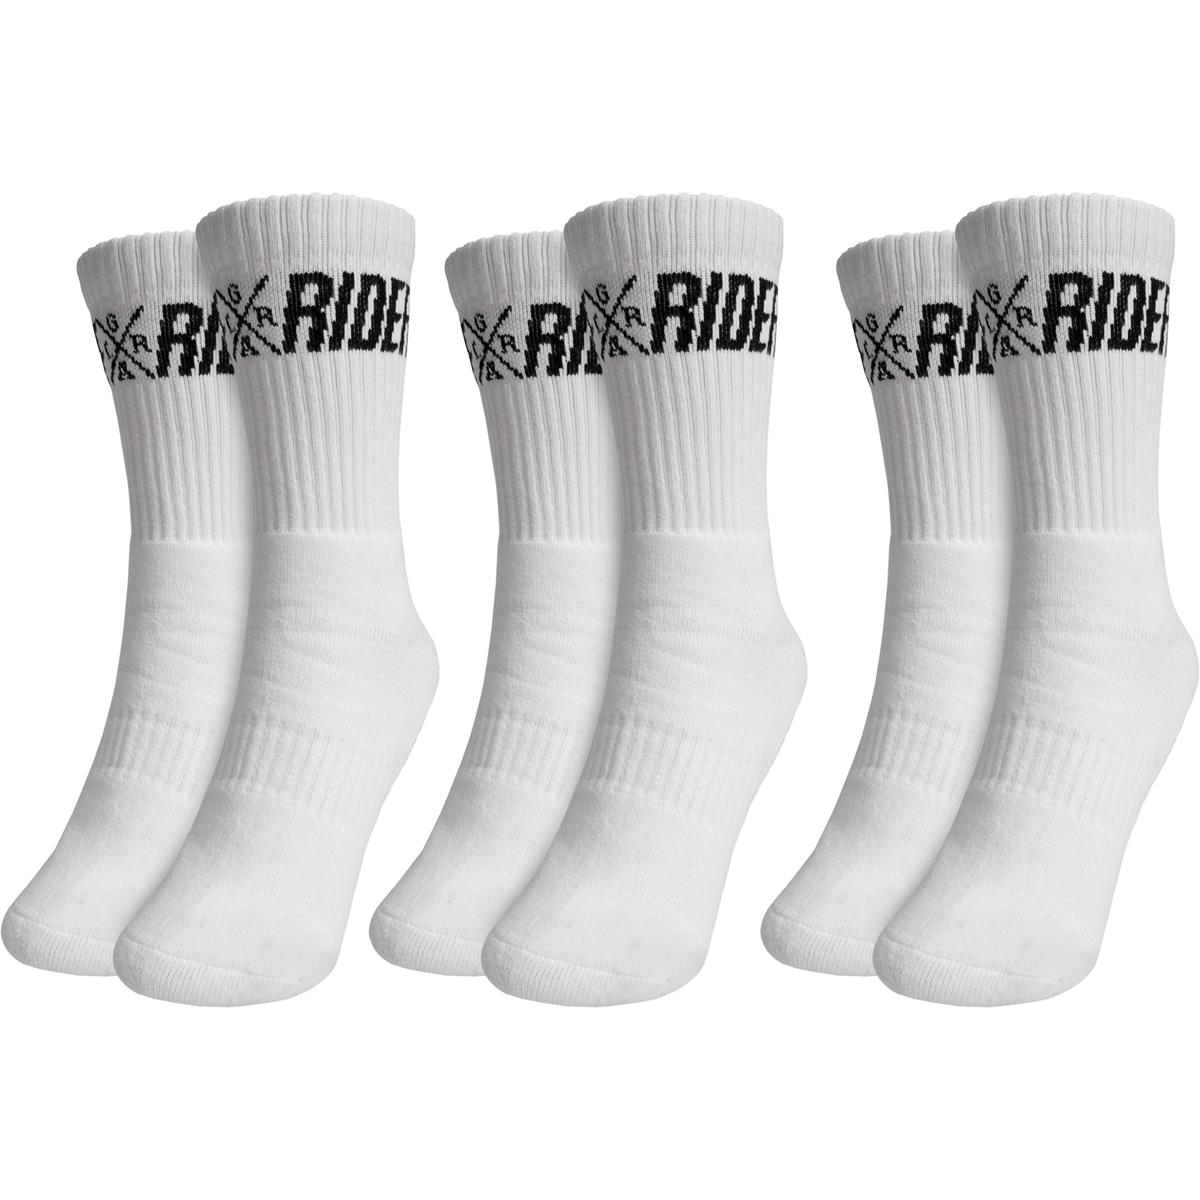 Loose Riders MTB Socks  Pack of 3 - Classic White